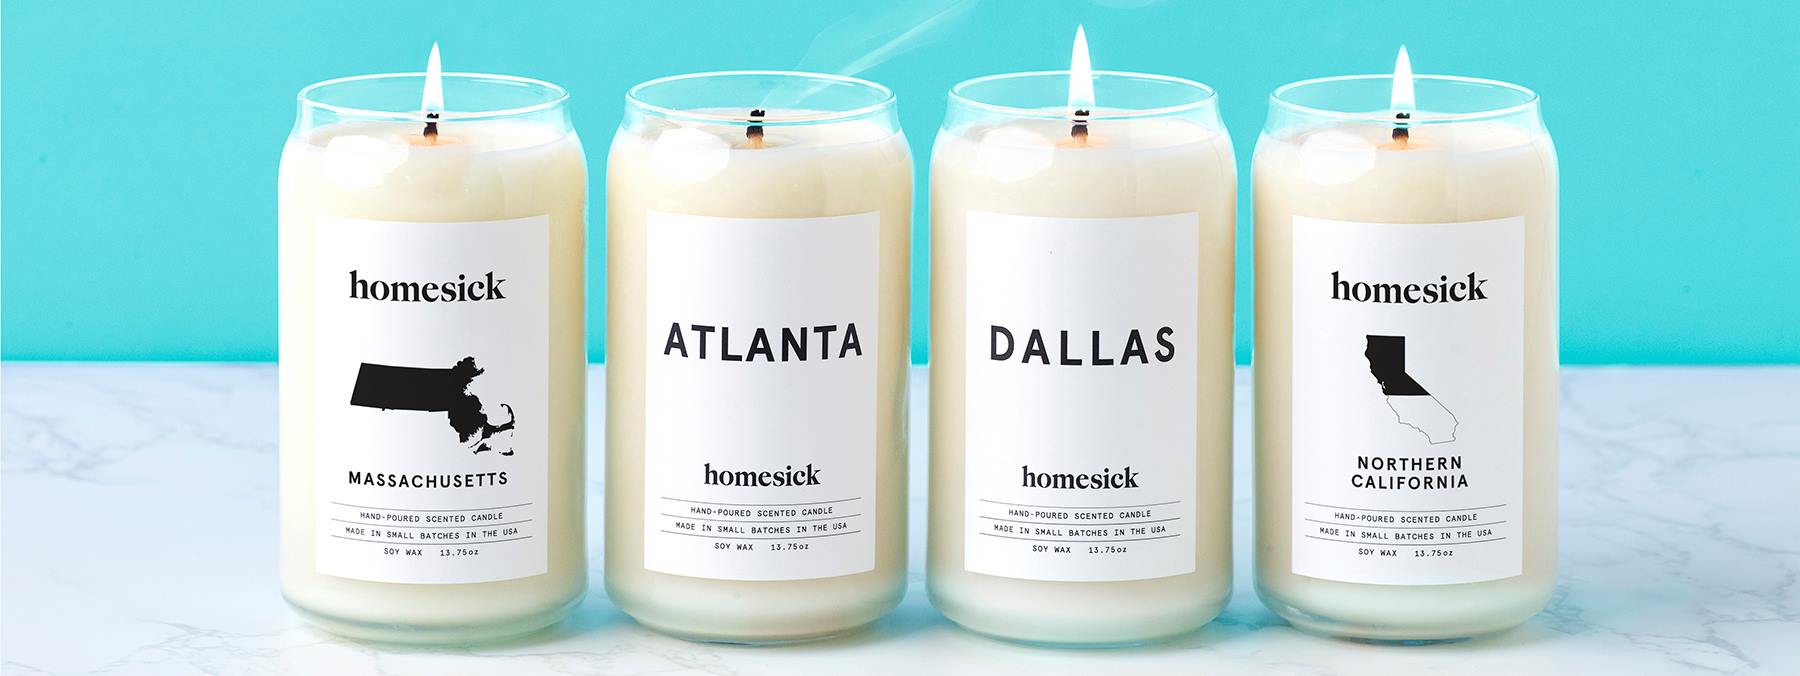 Homesick Candles Dallas Atlanta